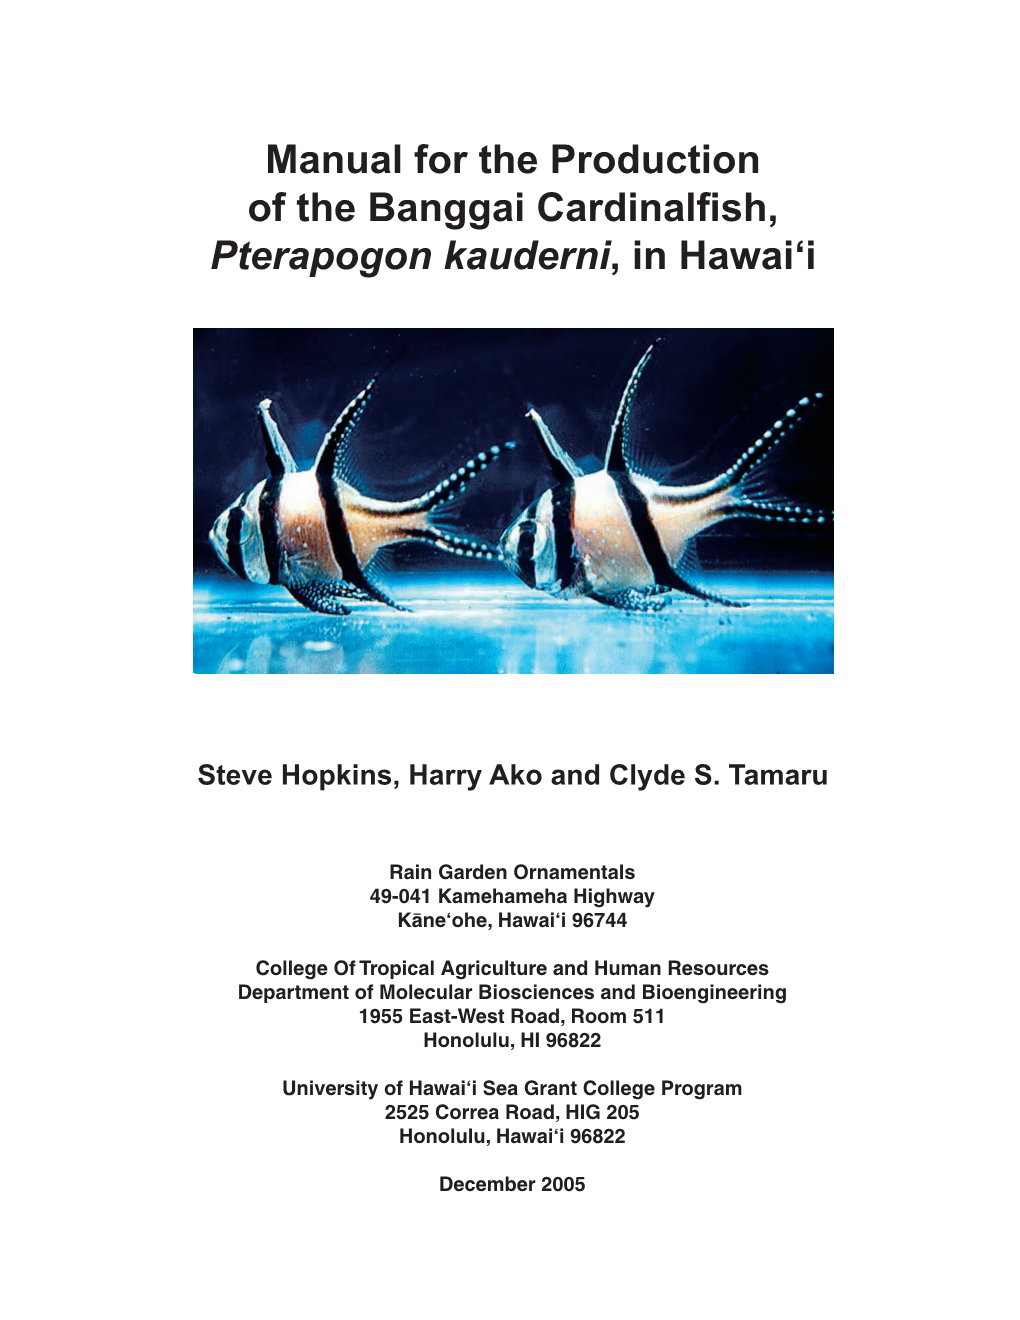 Manual for the Production of the Banggai Cardinalfish, Pterapogon Kauderni, in Hawai‘I